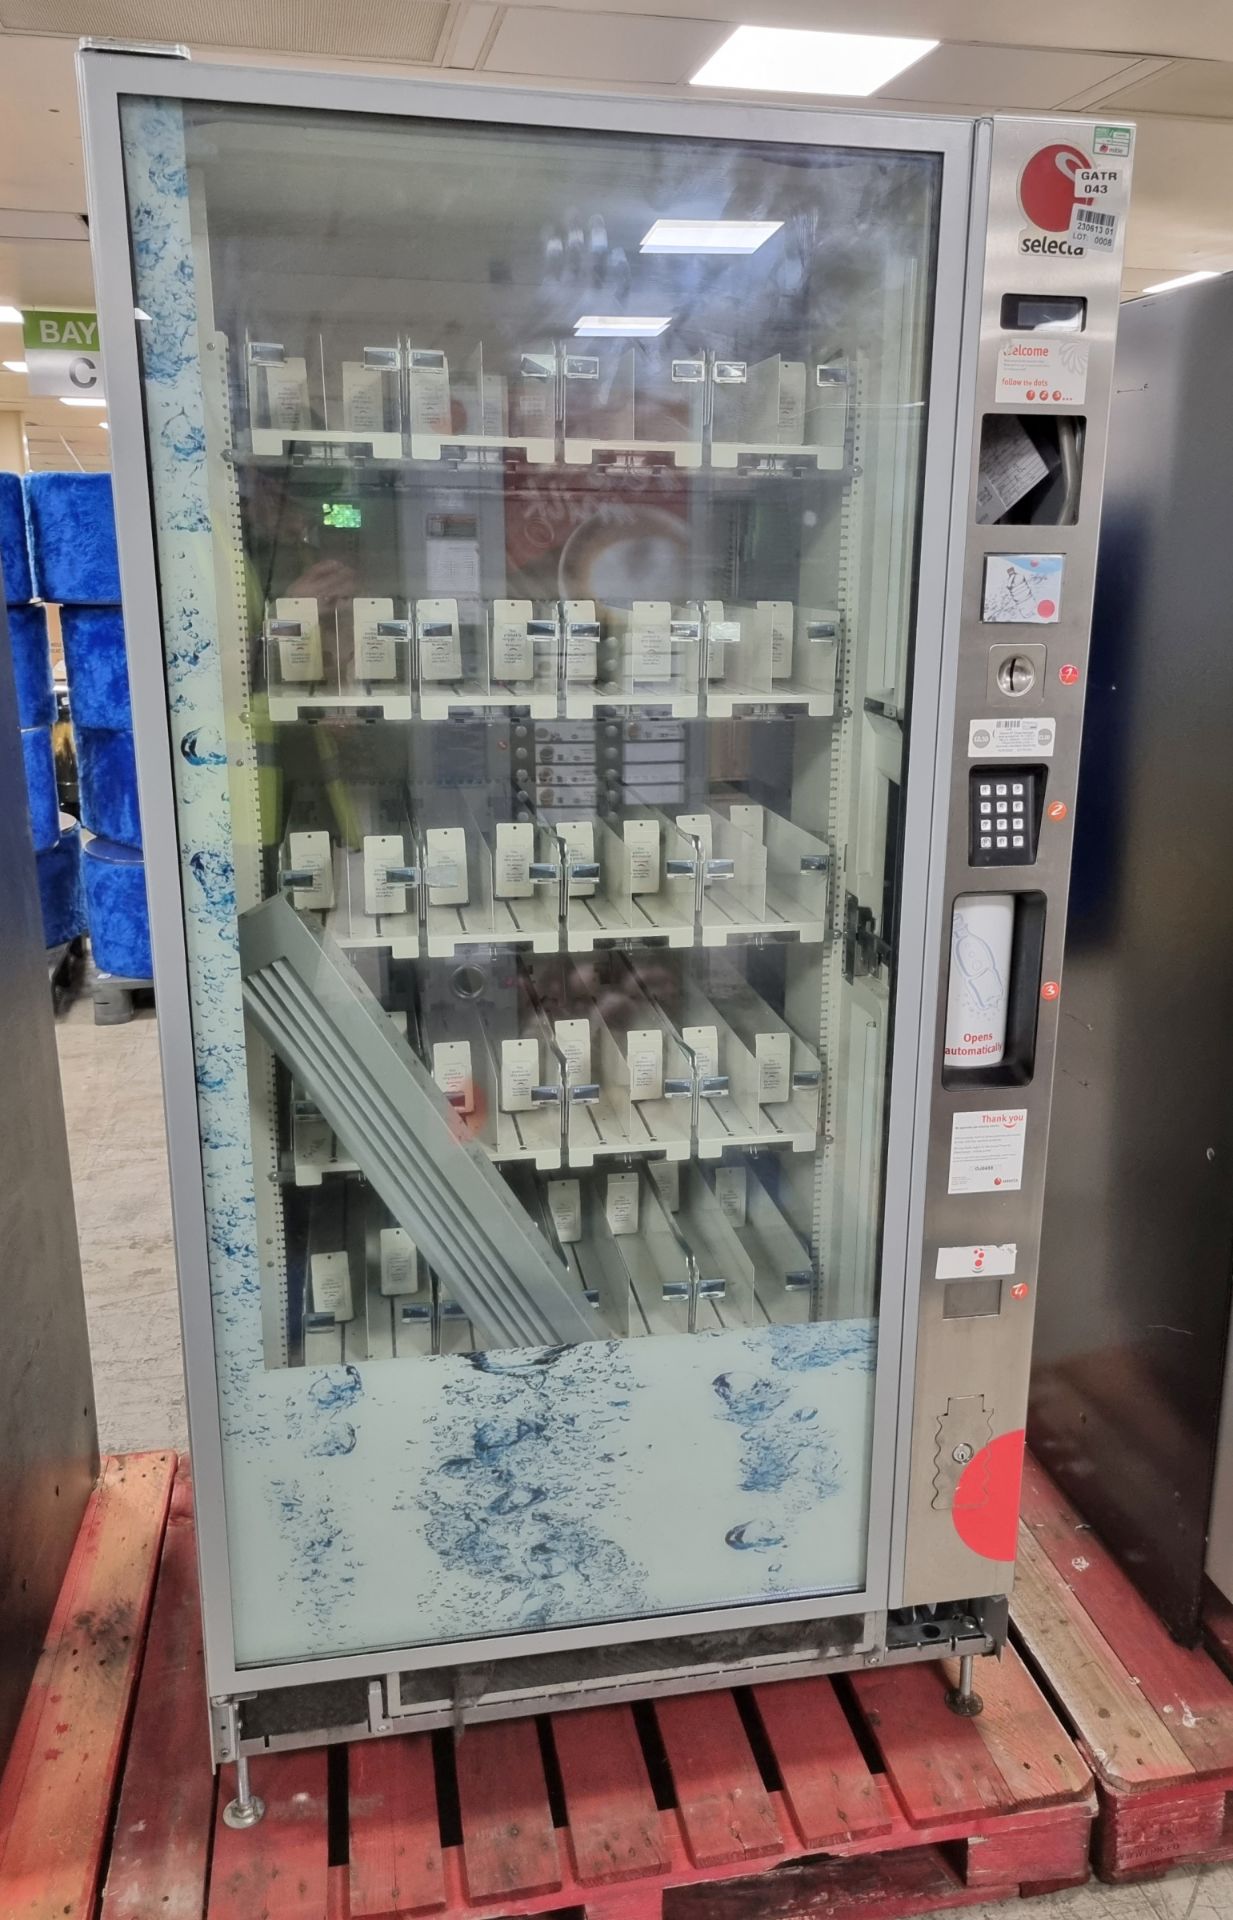 Selecta ST Tropez beverage vending machine - W 1000 x D 880 x H 1930mm - HOLE IN FRONT